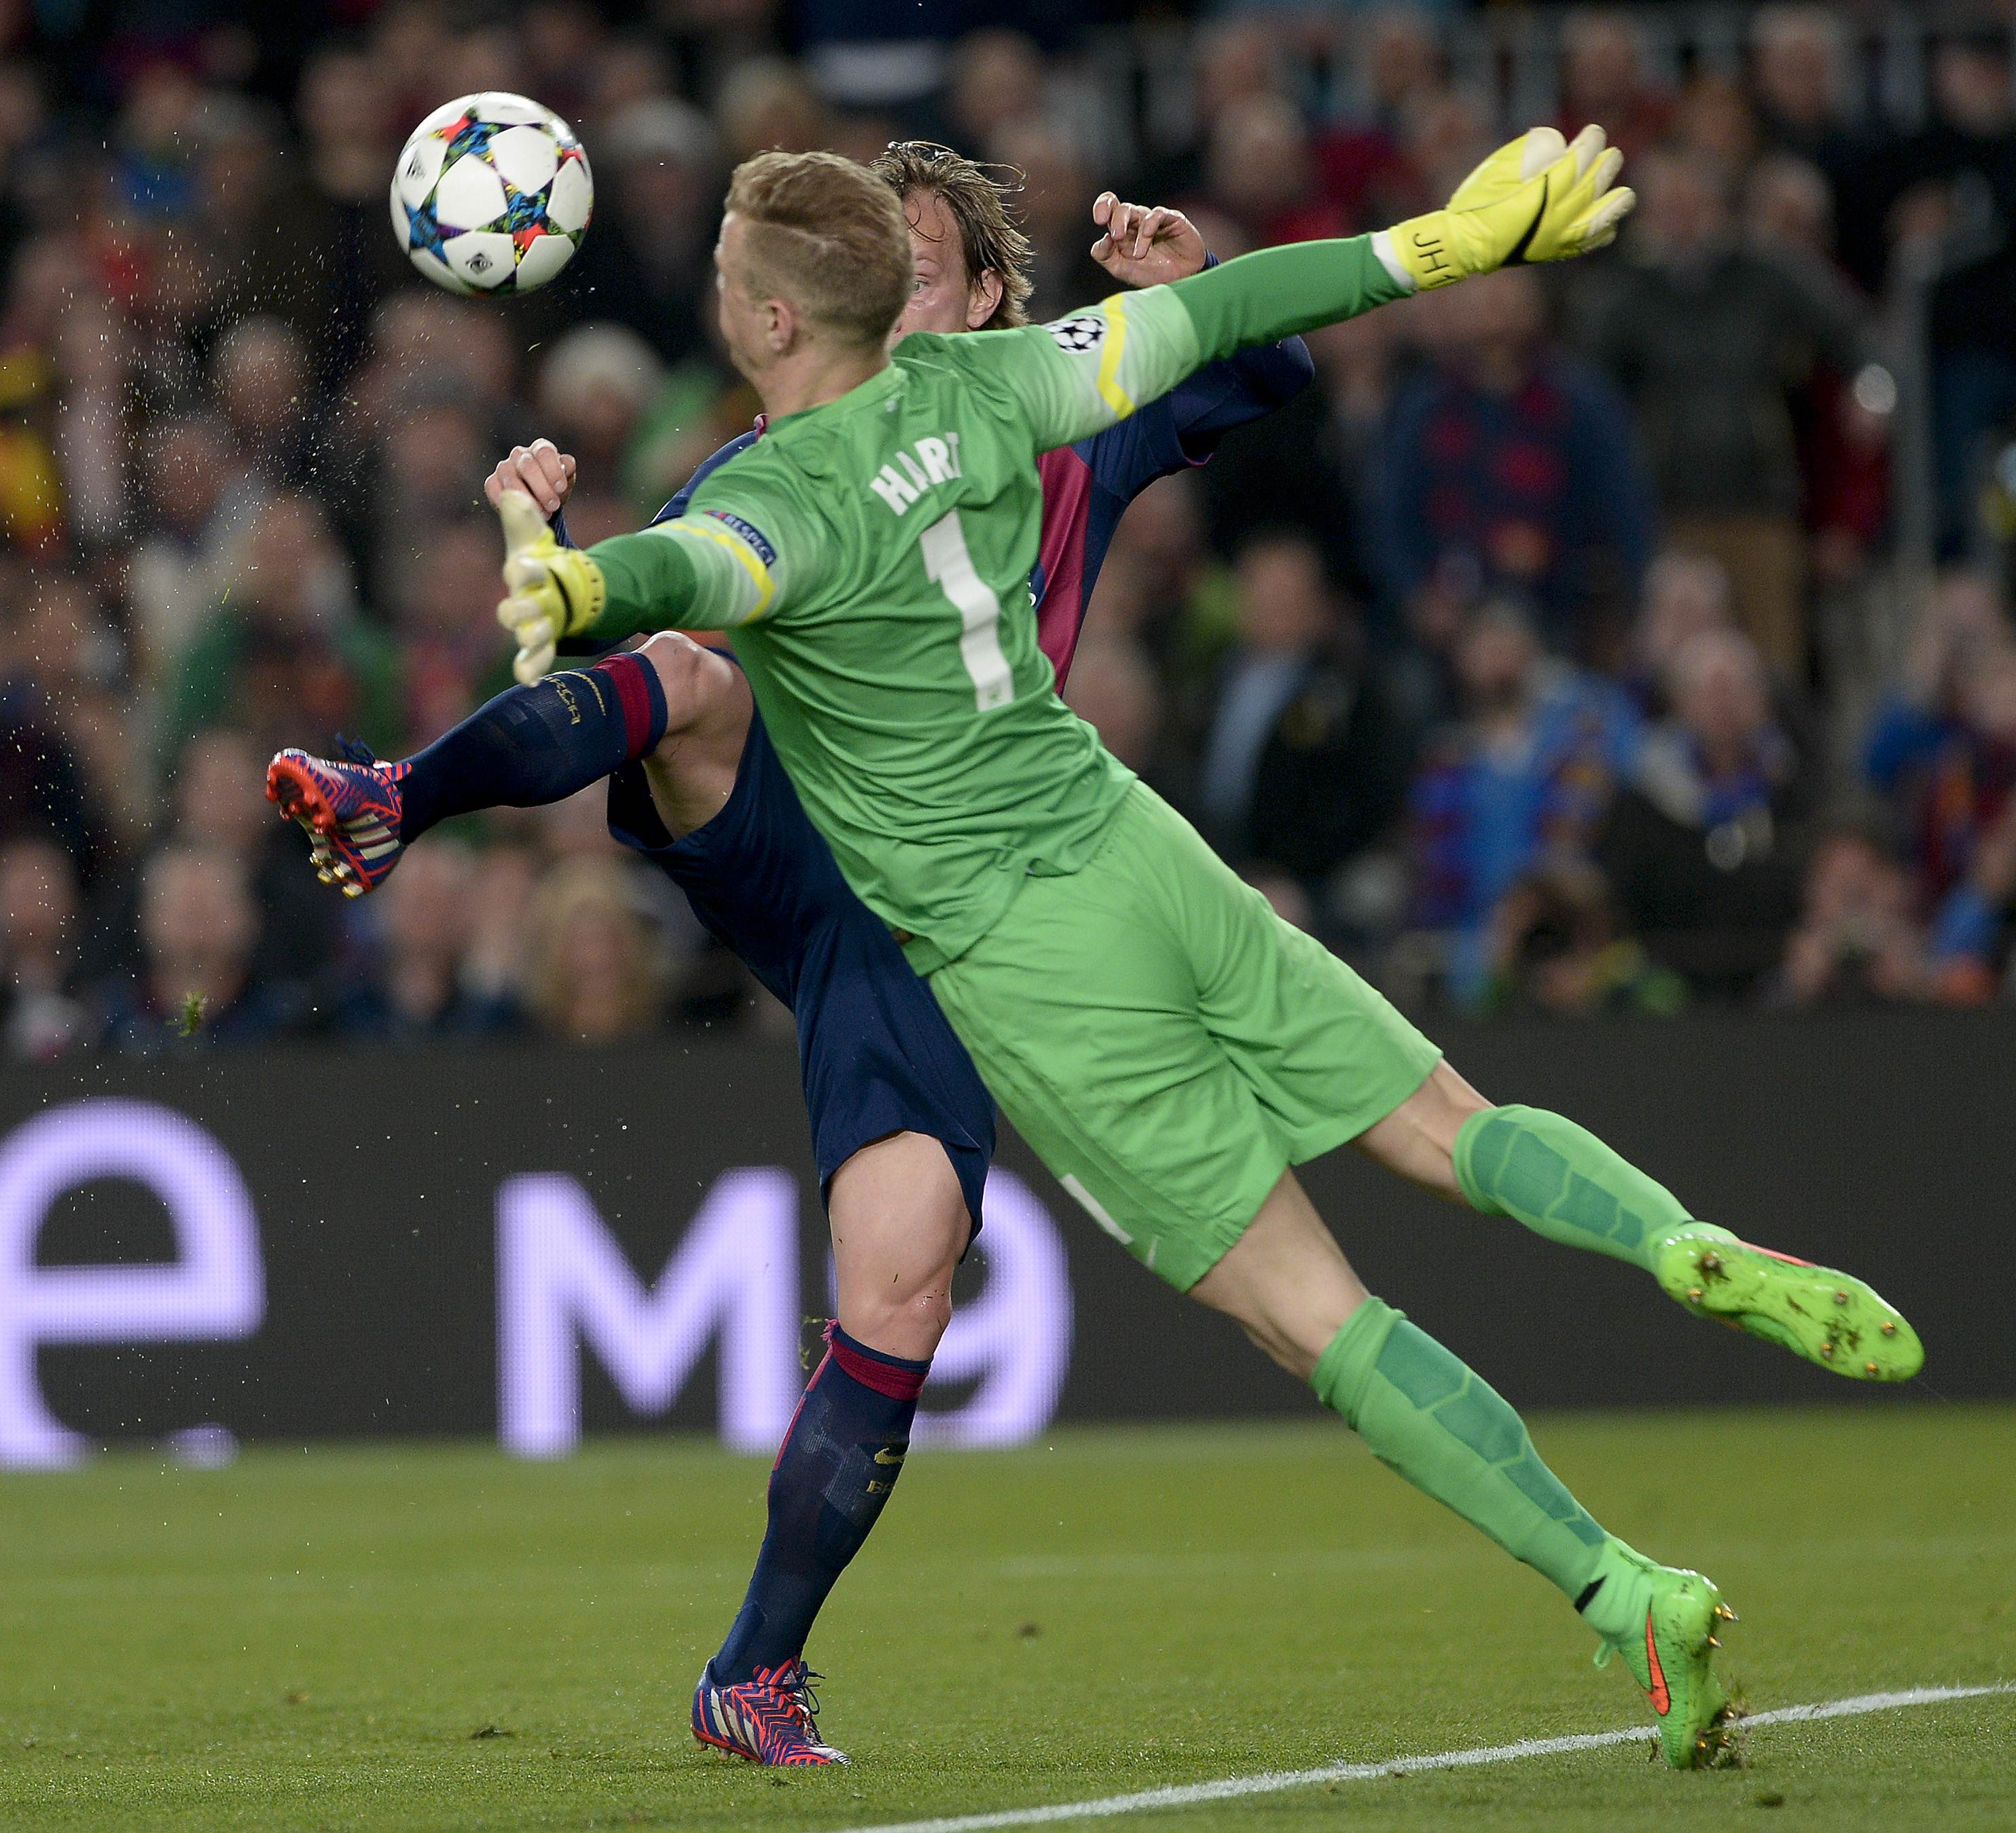 Barcelona's Ivan Rakitic scores past Manchester City keeper Joe Hart. Photo: AFP